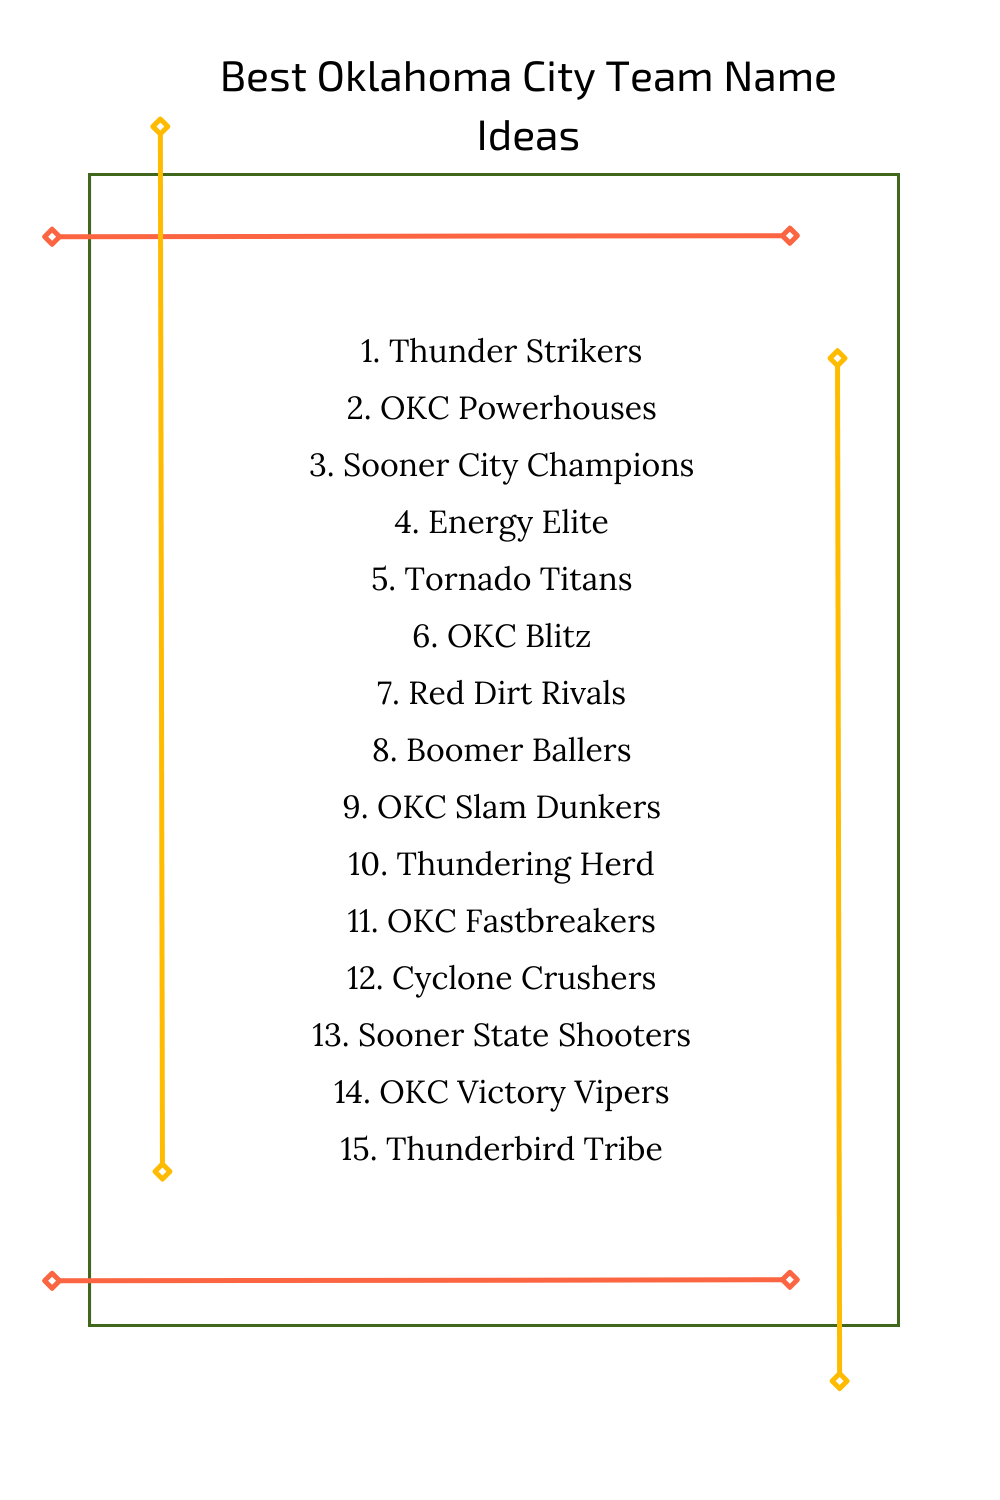 Best Oklahoma City Team Name Ideas